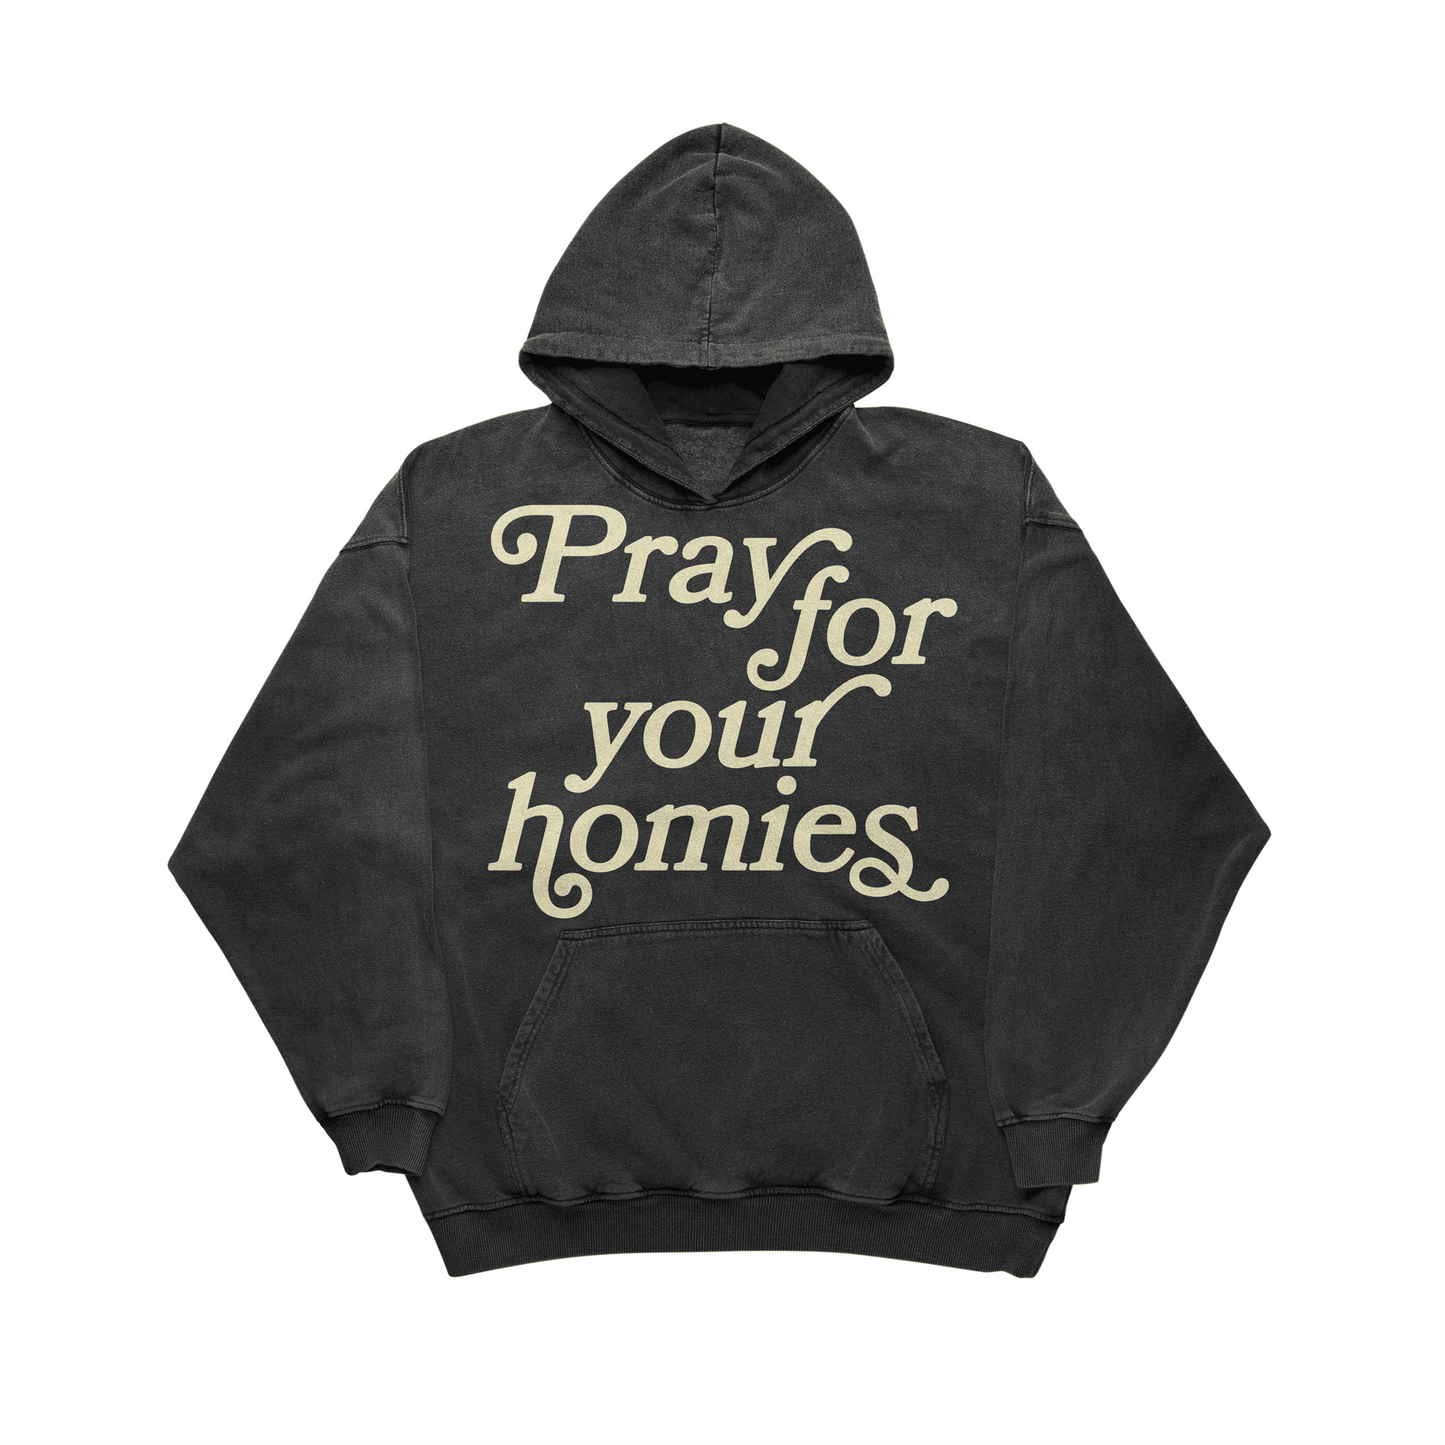 PREMIUM "PRAY FOR YOUR HOMIES" HOODIE BLACK